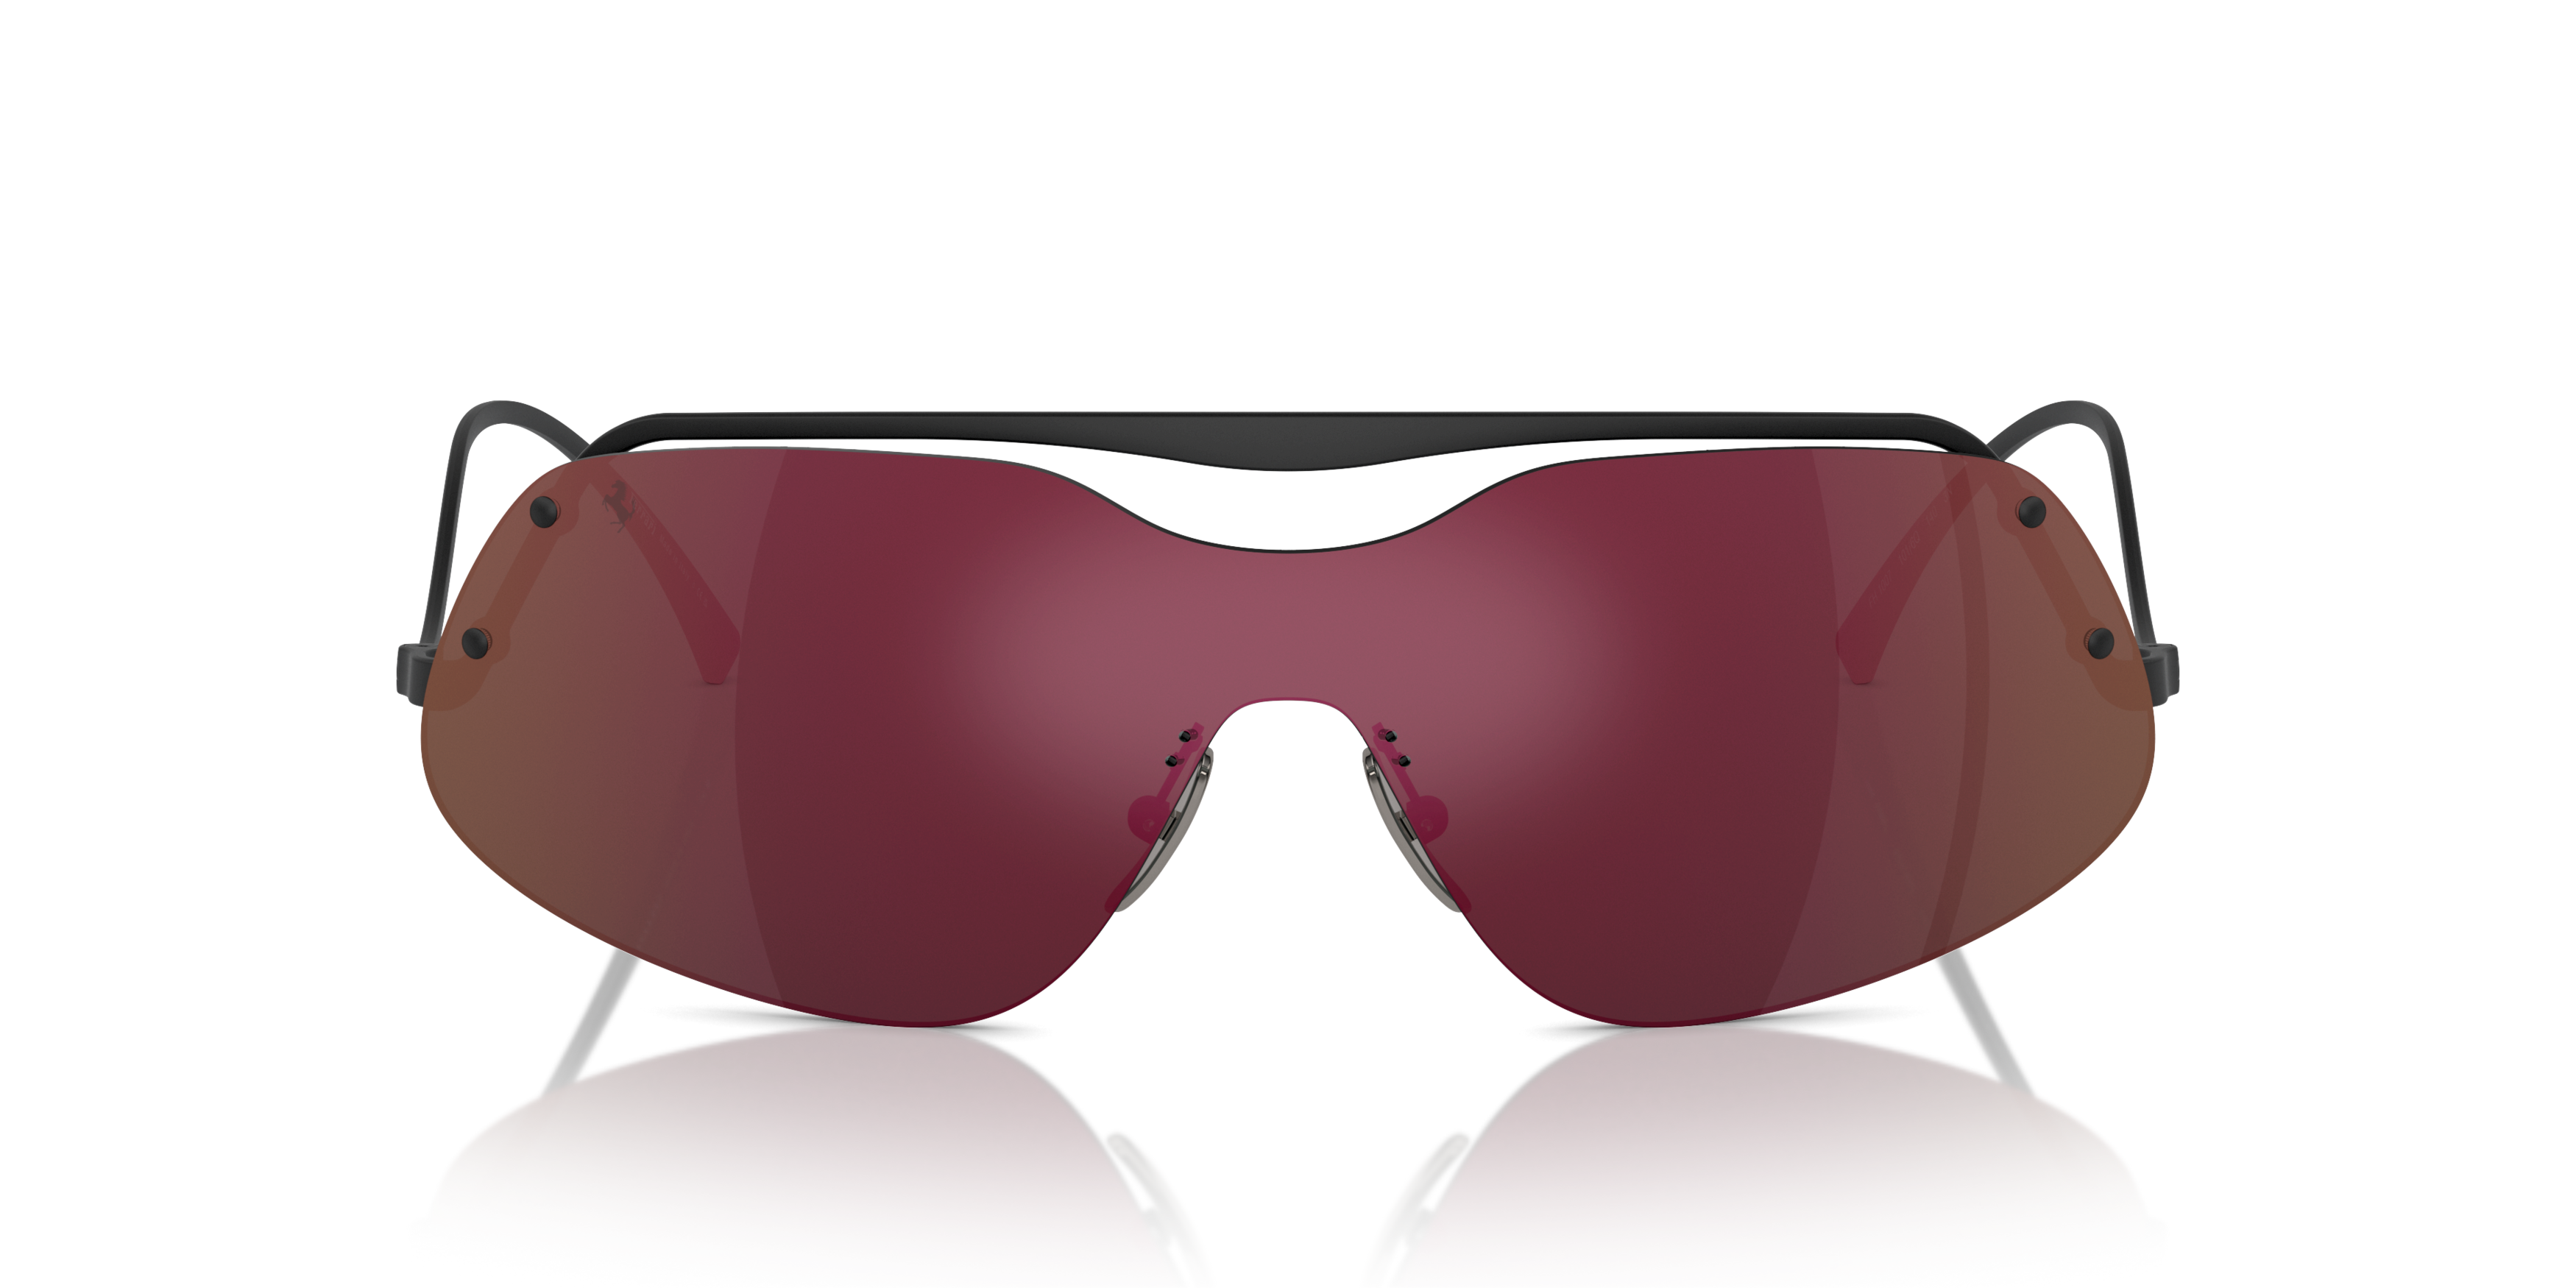 [products.image.front] Ferrari Cavallino FH1007 Sunglasses